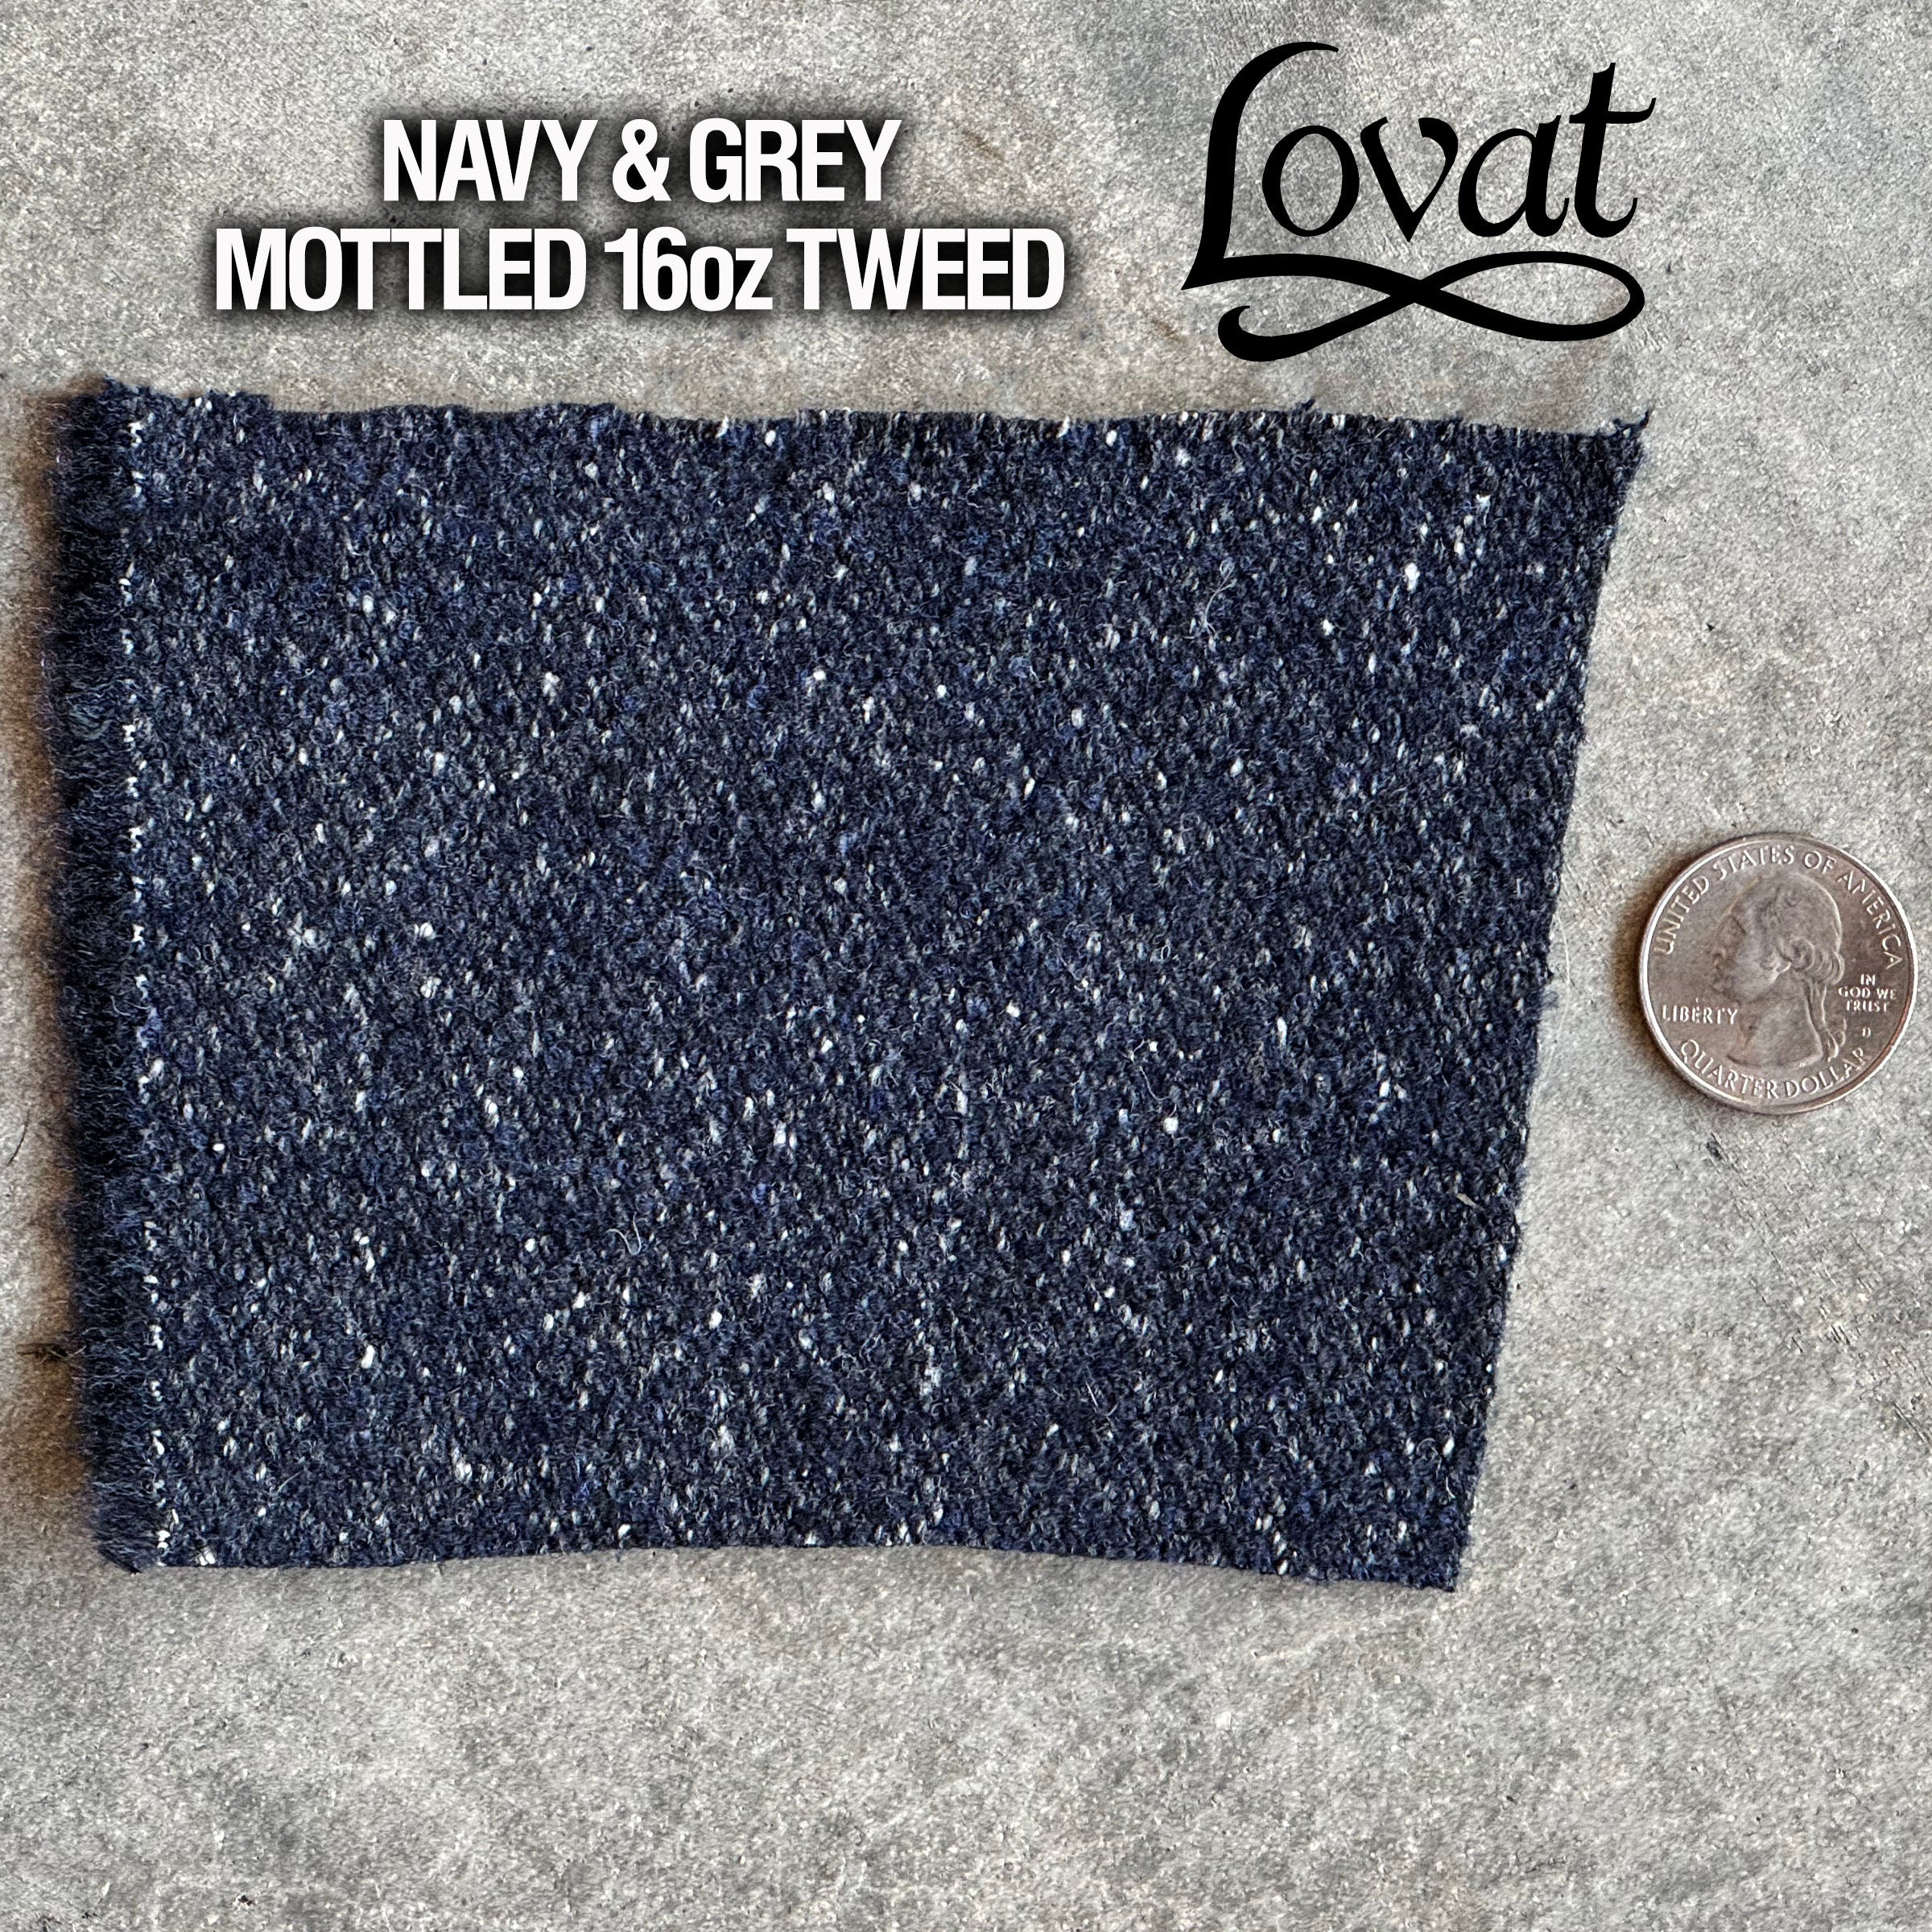 Custom Sportcoats Lovat Mills Navy & Grey Mottled Tweed